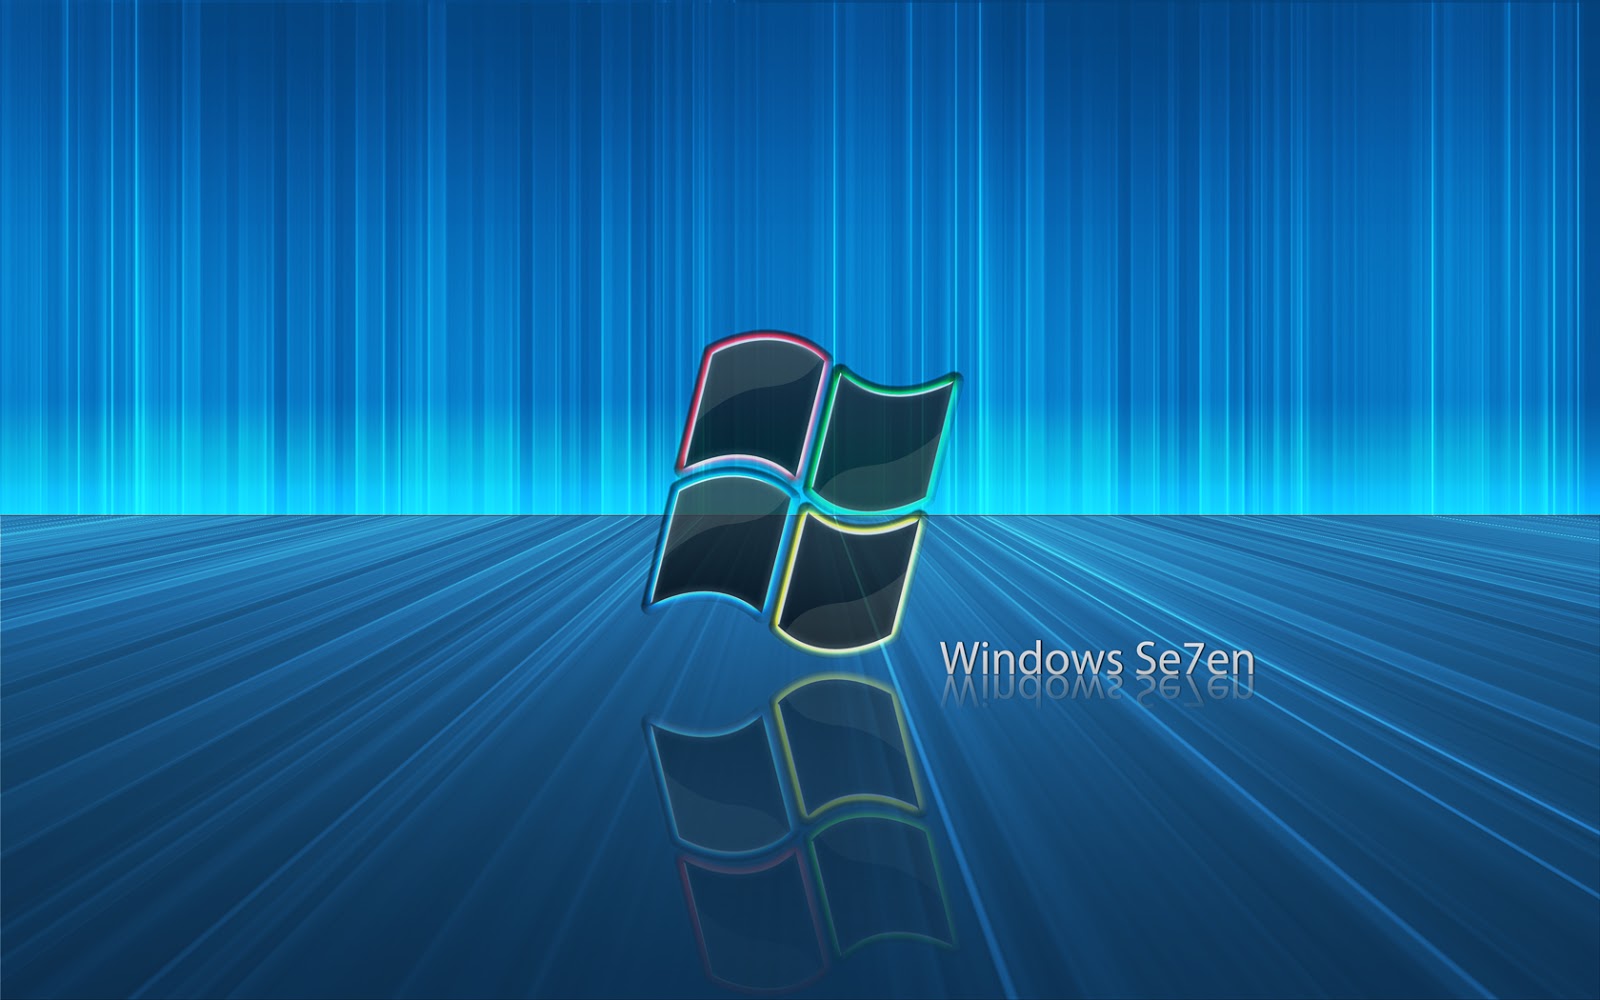  HD  Wallpapers  windows  8 full screen pics microsoft 